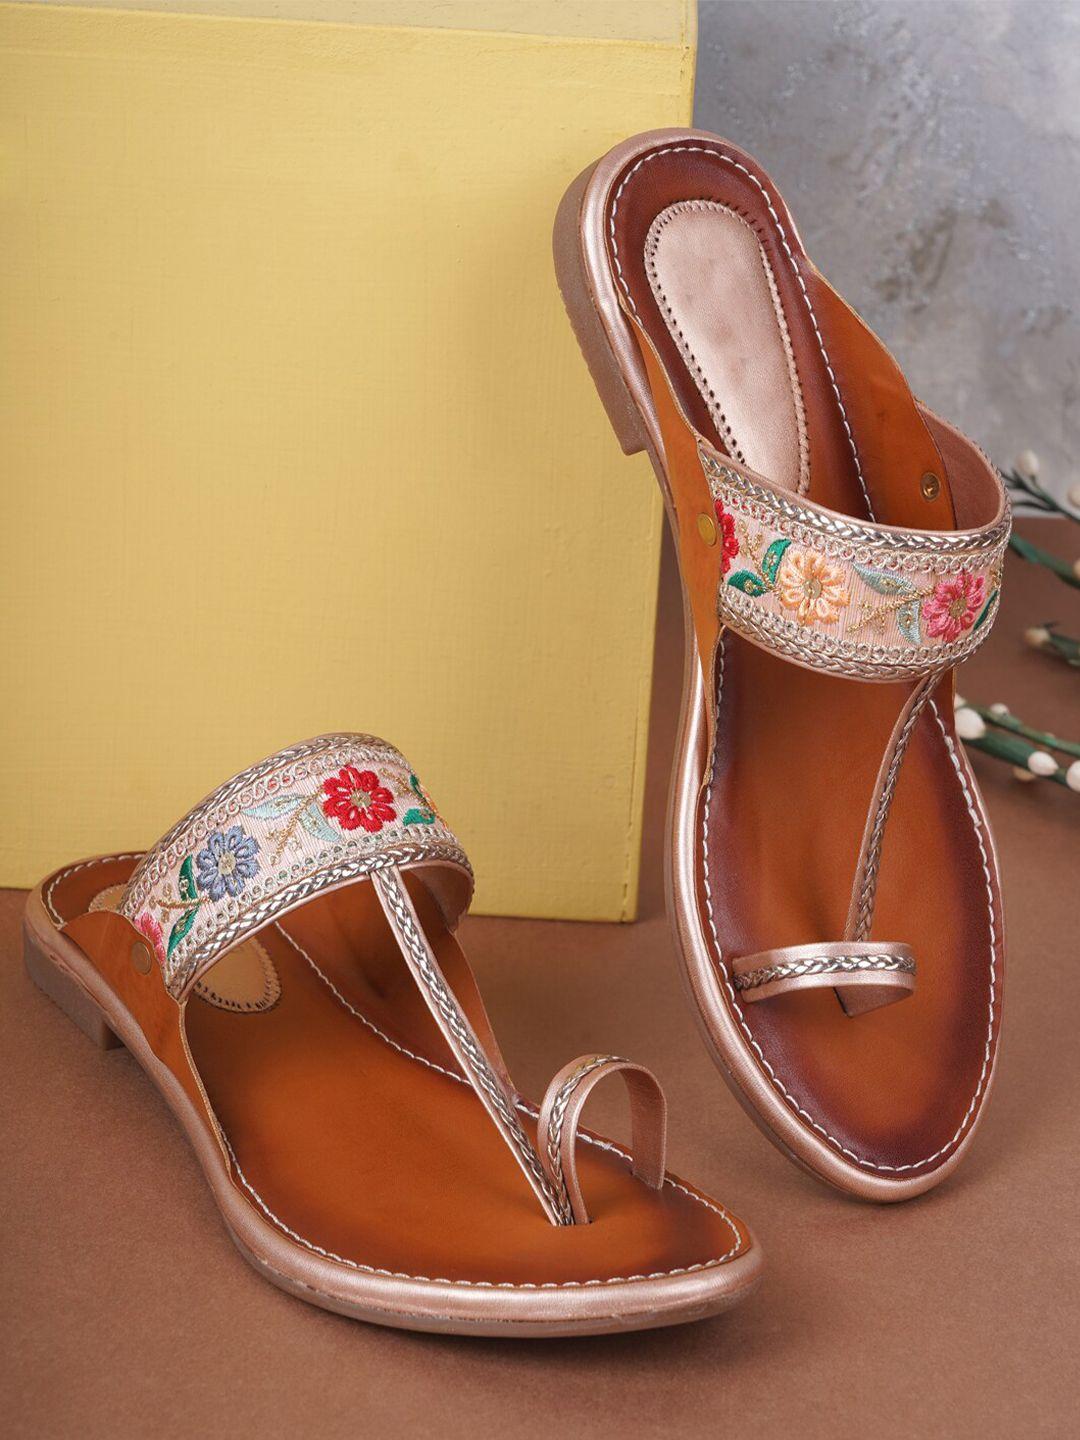 style-shoes-women-embellished-one-toe-flats